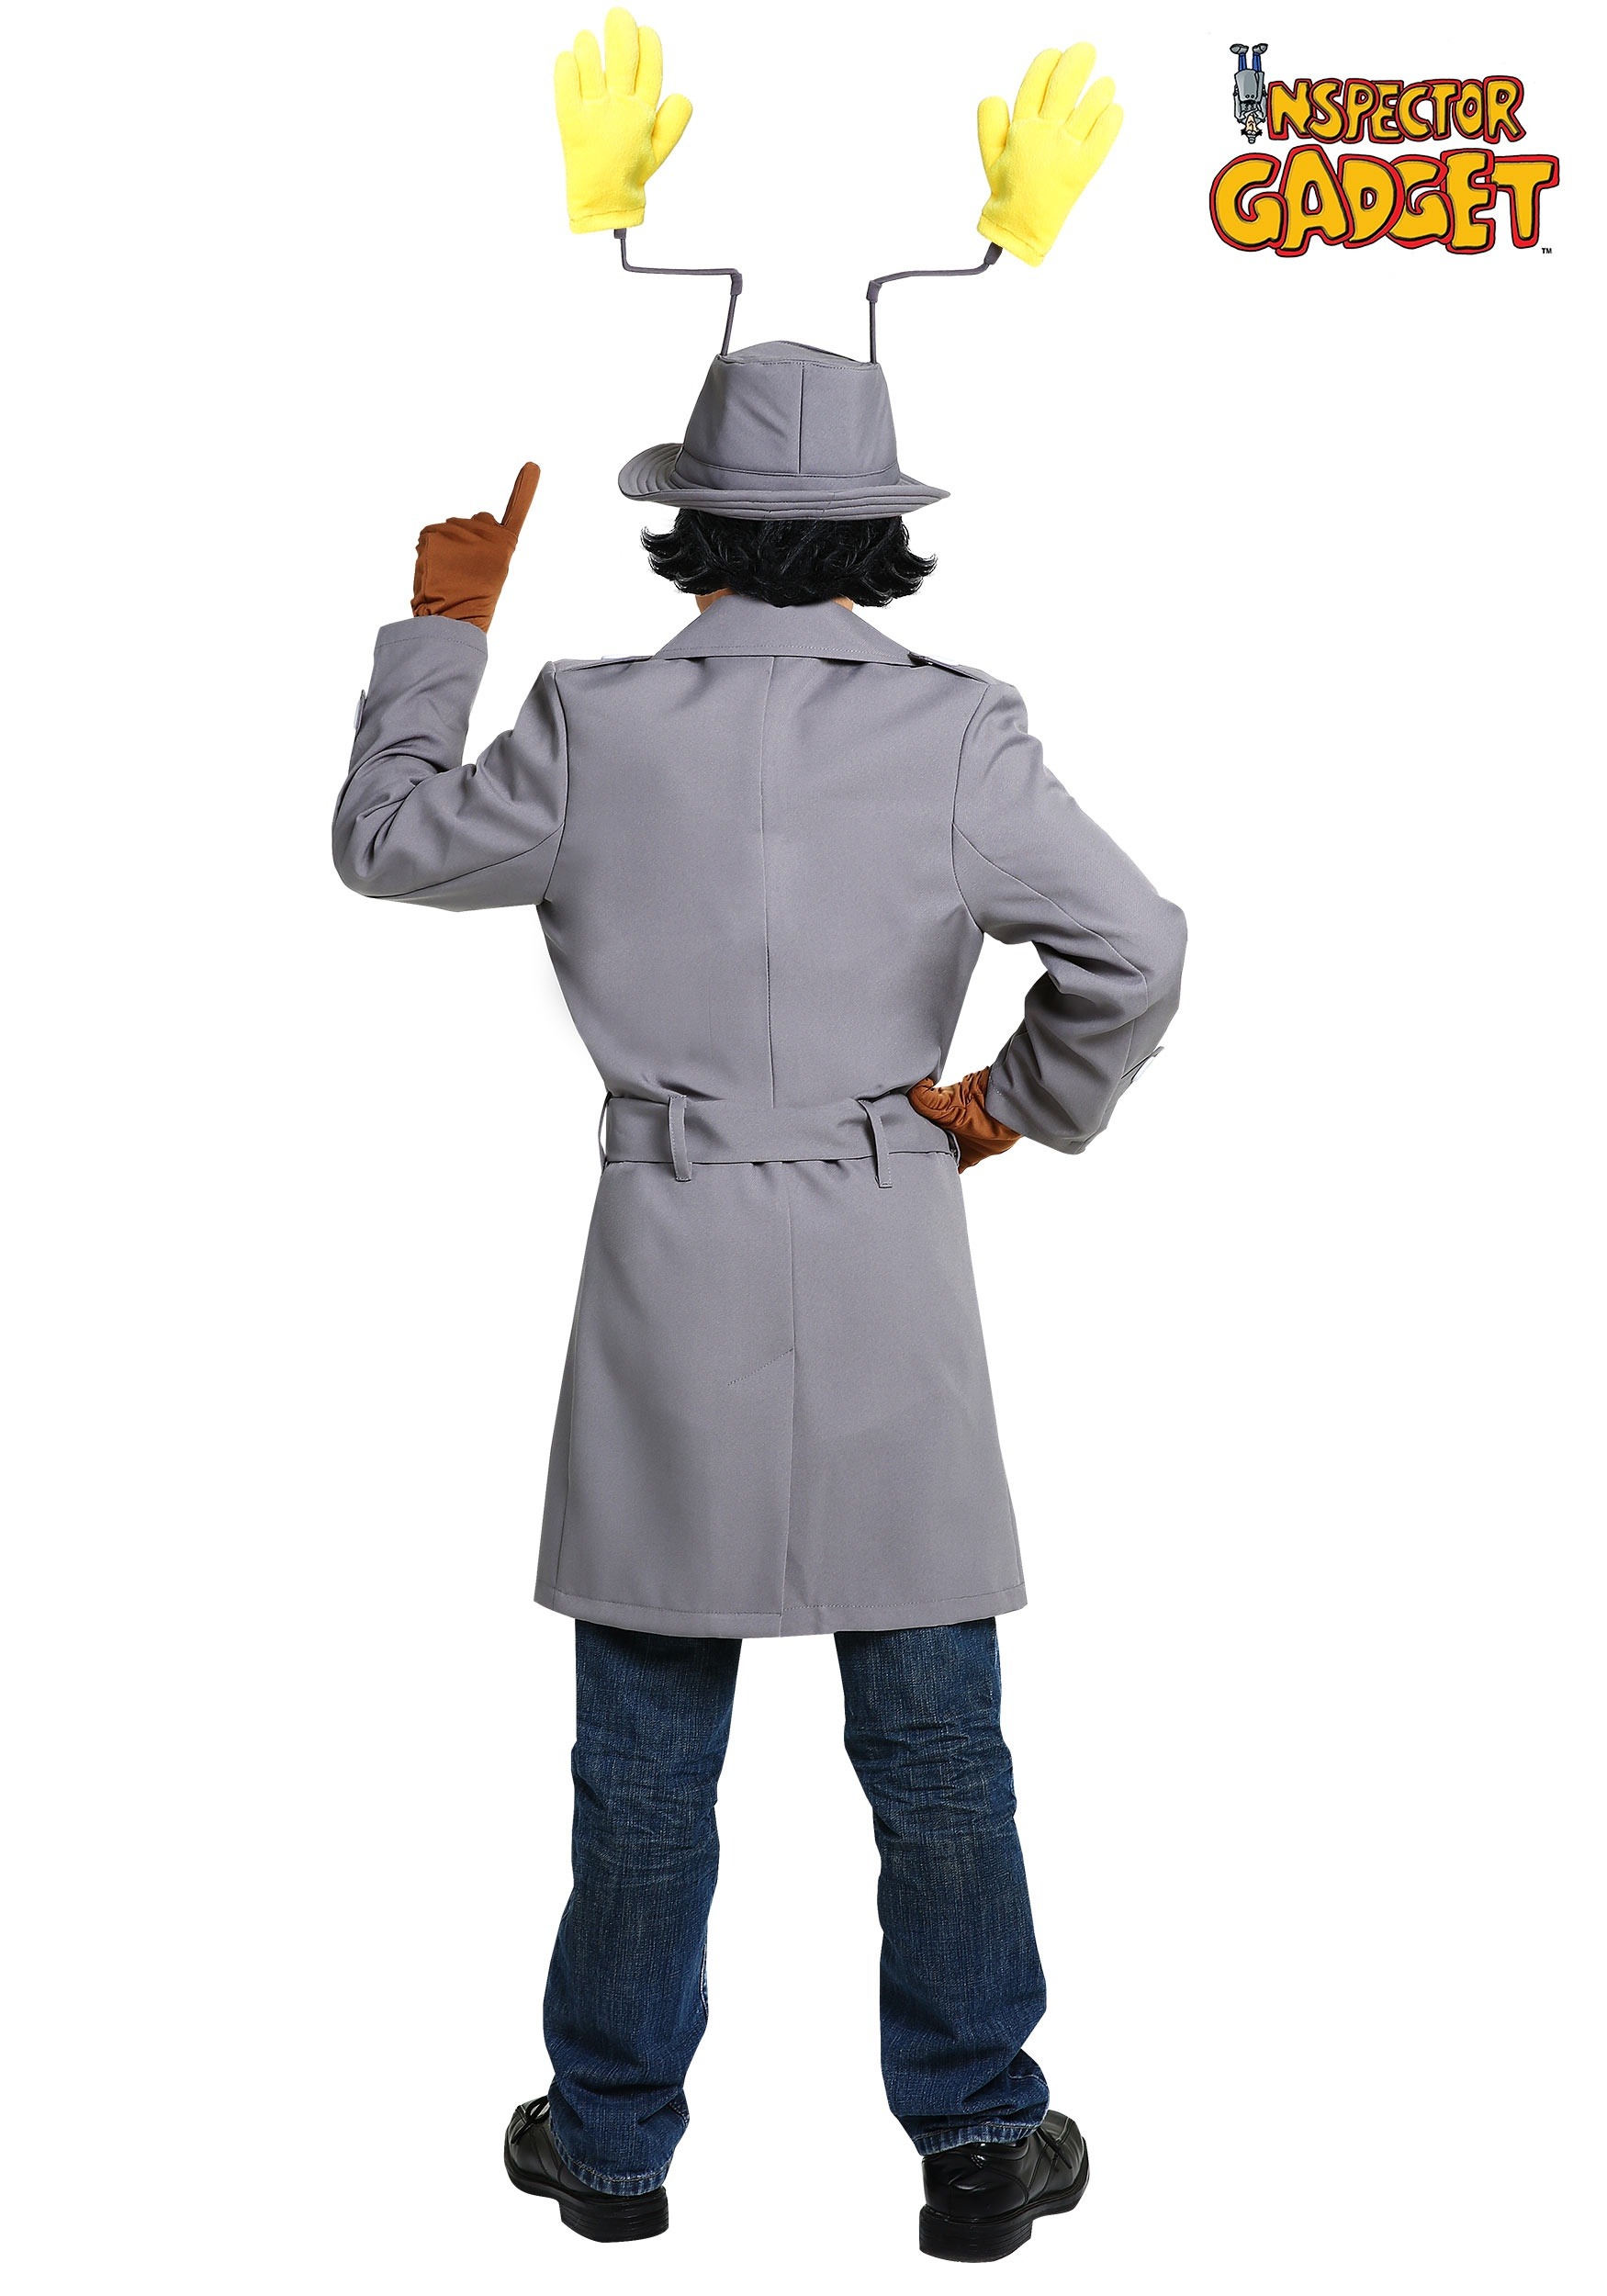 Inspector Gadget Boys Costume - image 2 of 4